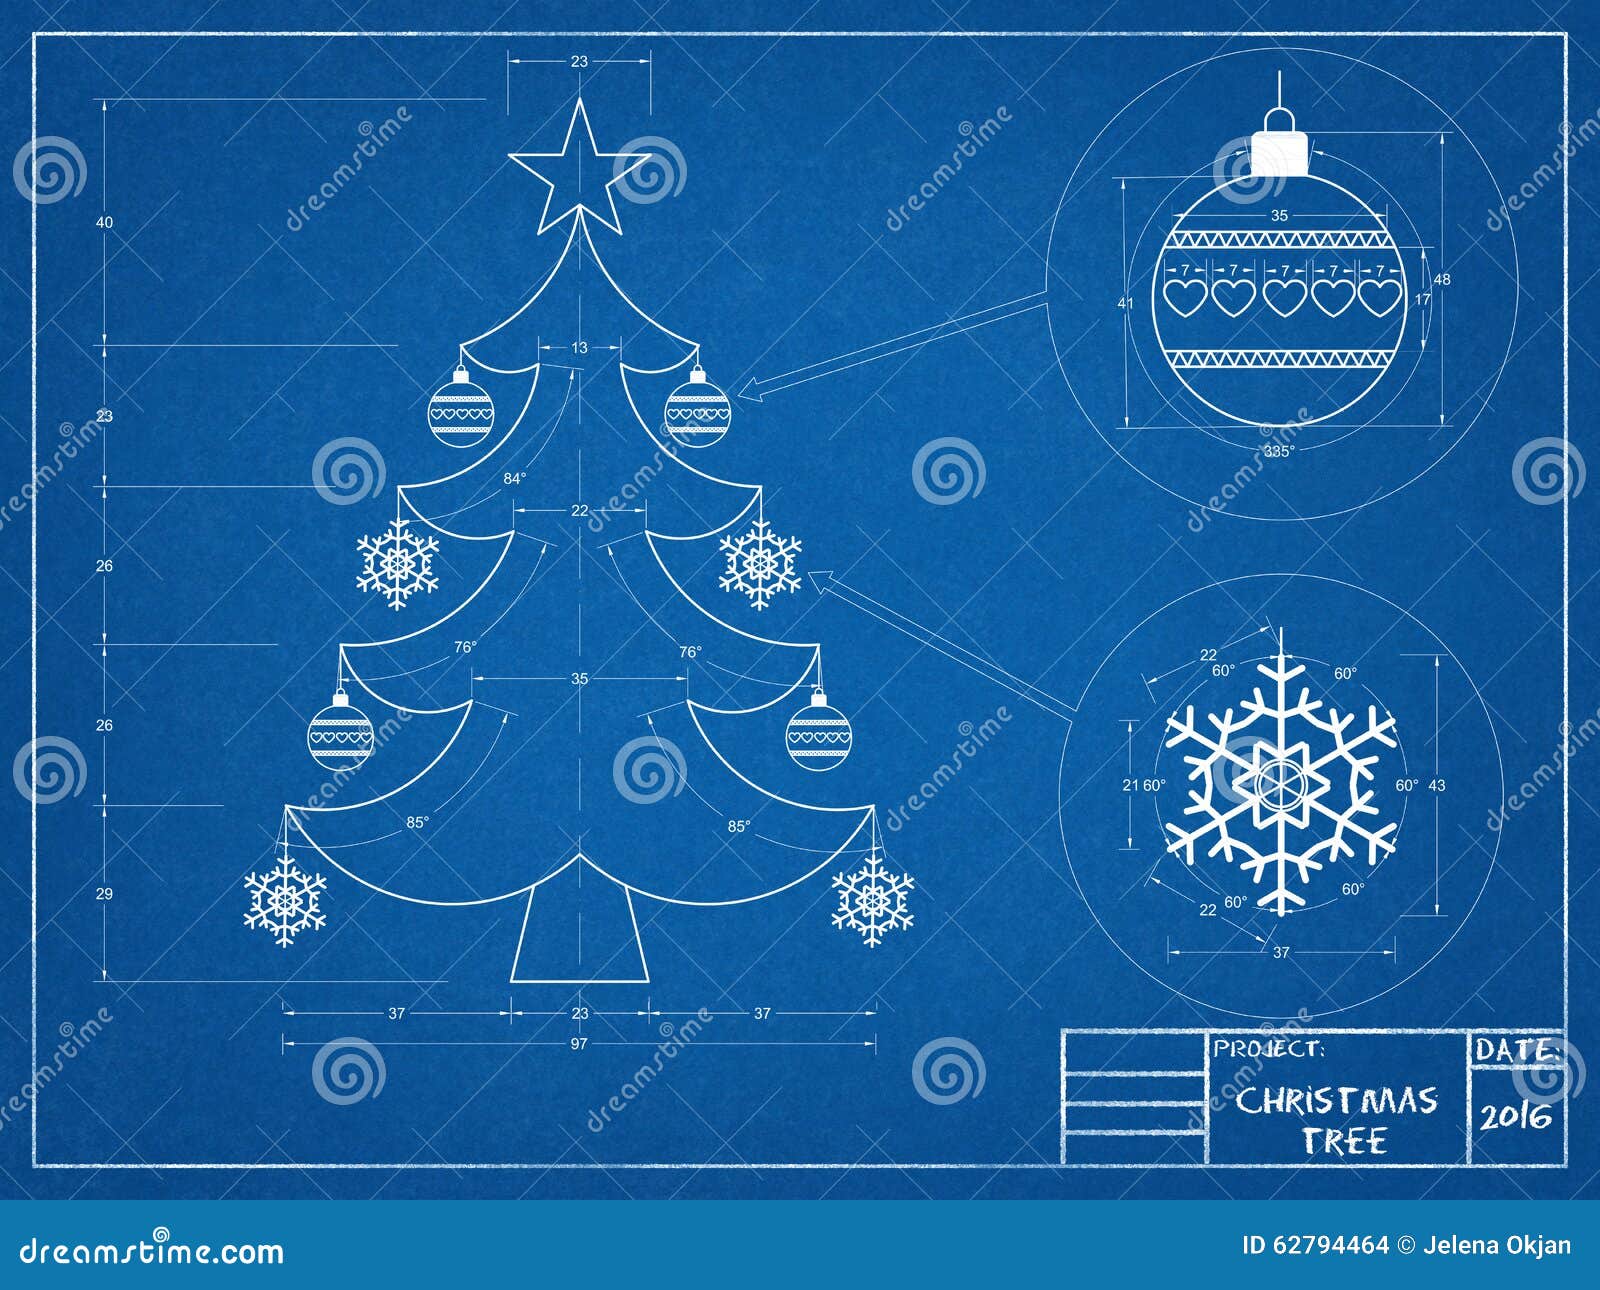 Christmas Tree Blueprint Stock Photo - Image: 62794464